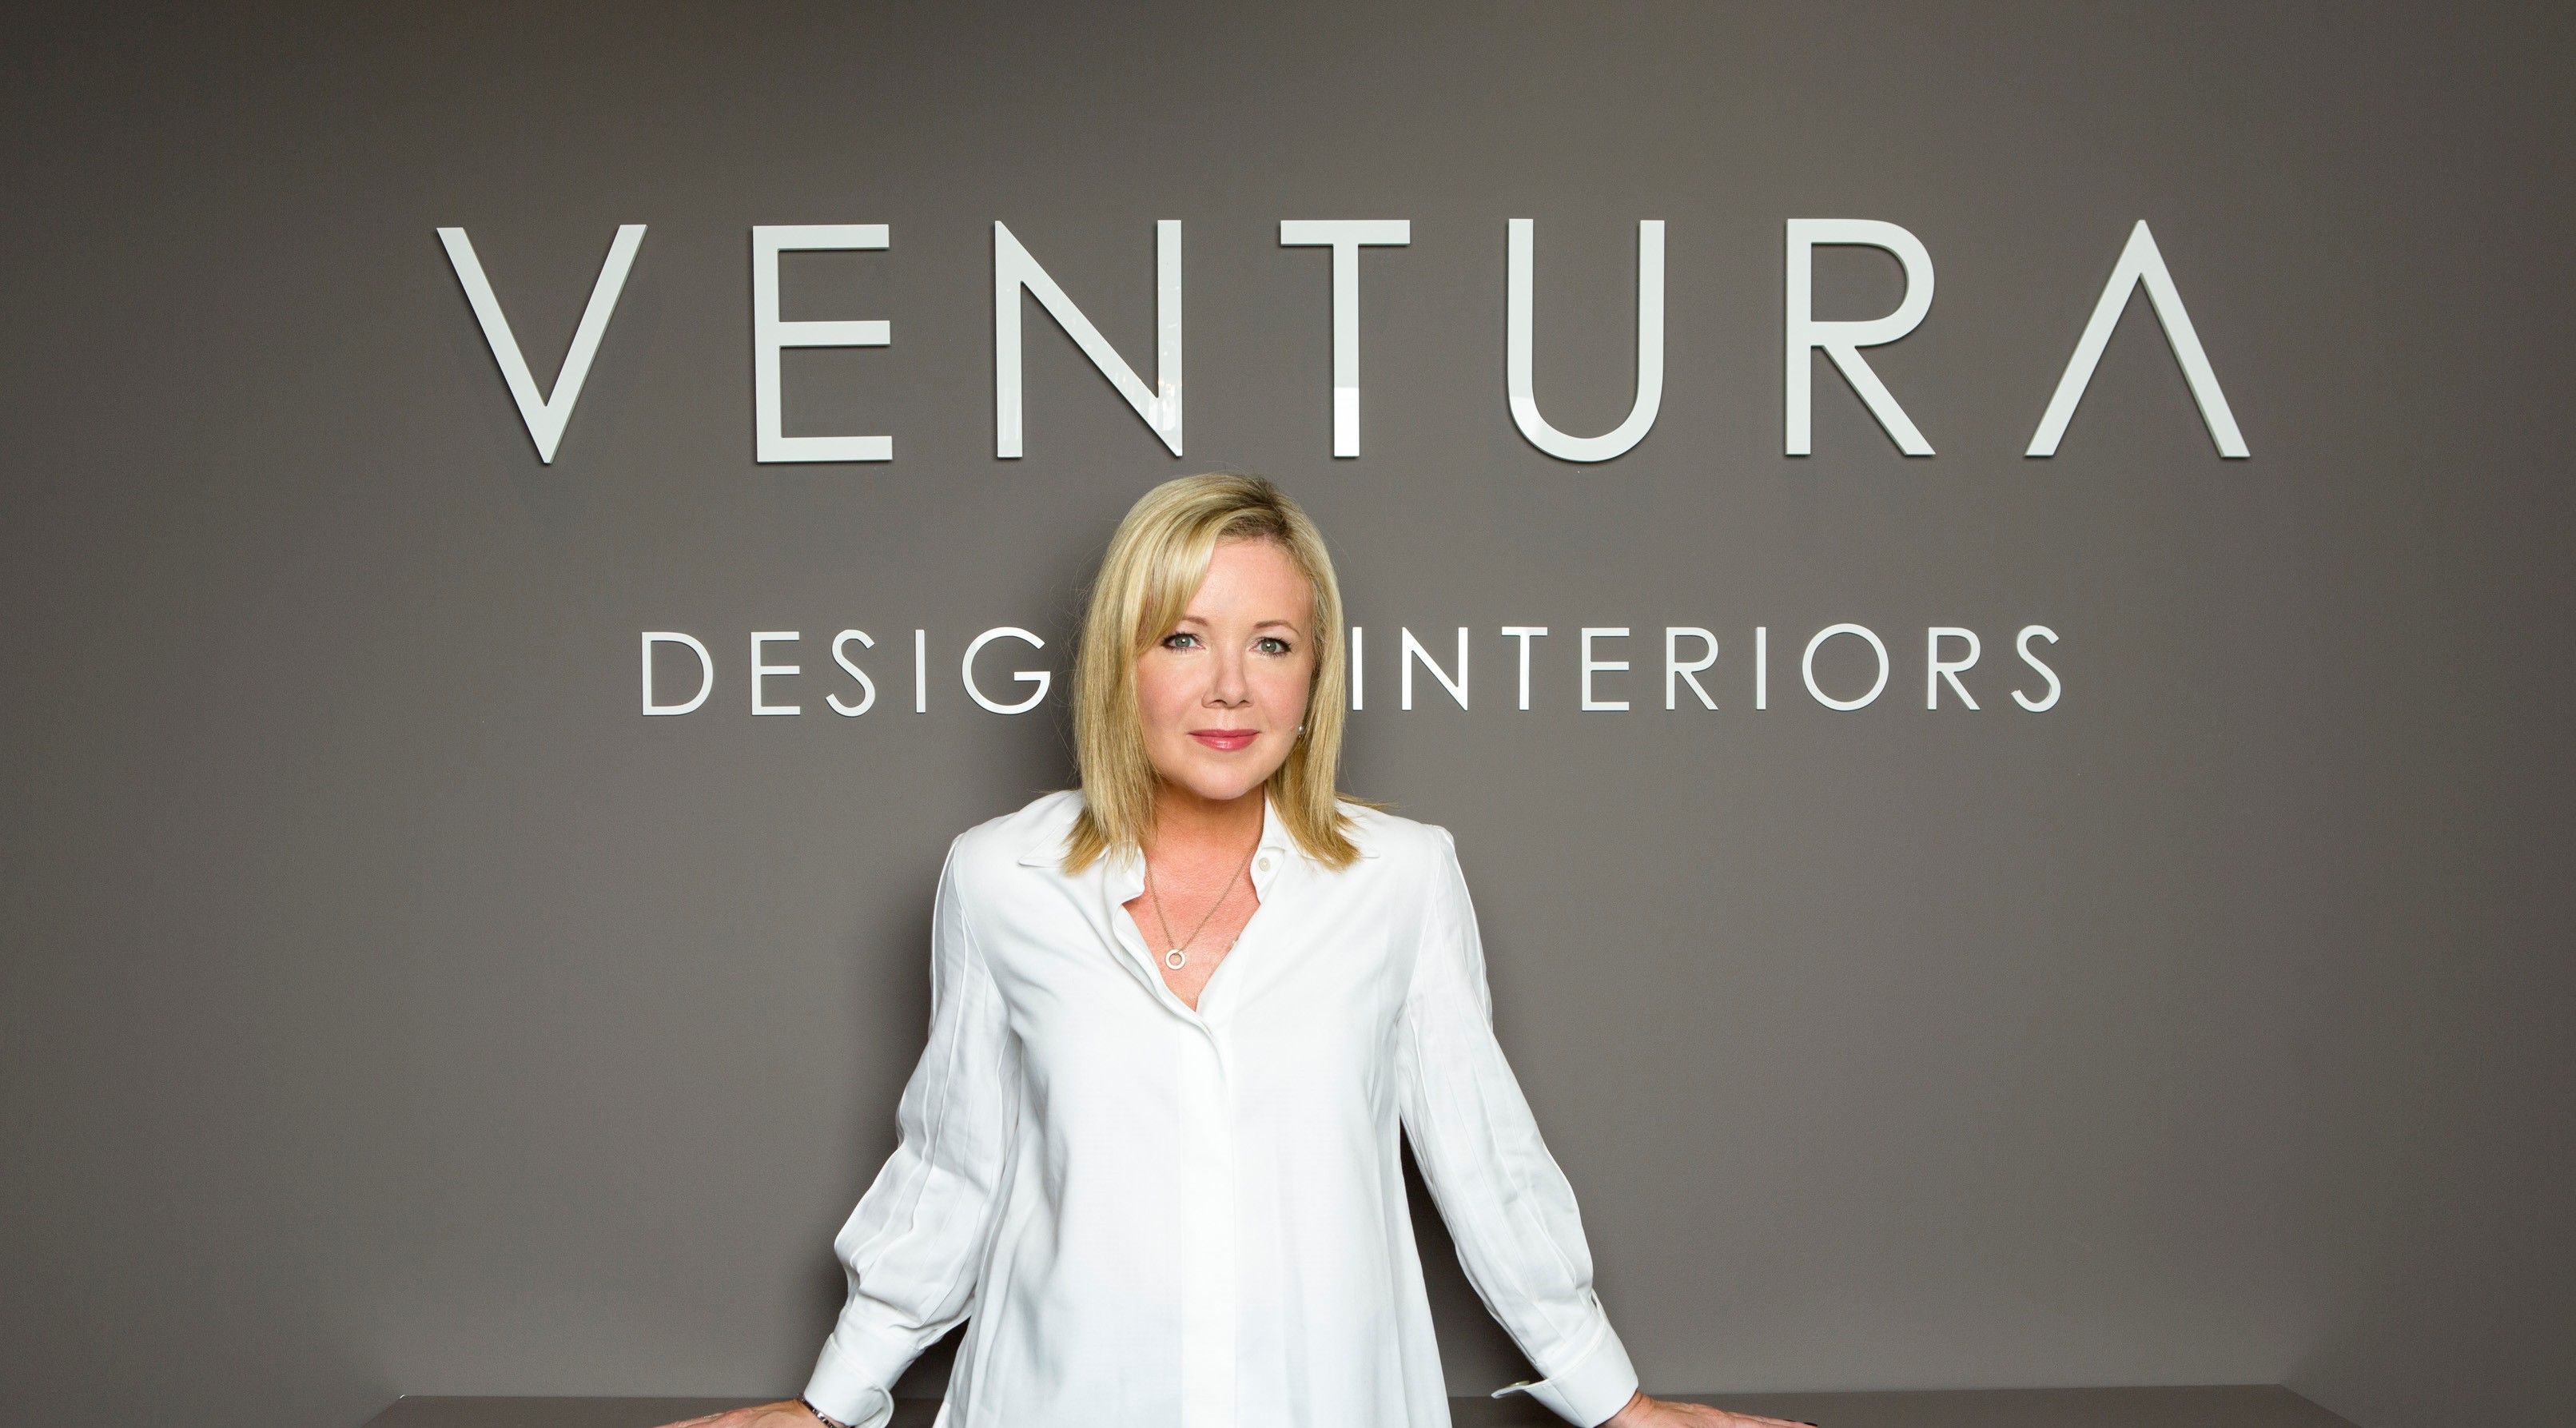 Meet Arlene McIntyre, Creative Director of Ventura Design